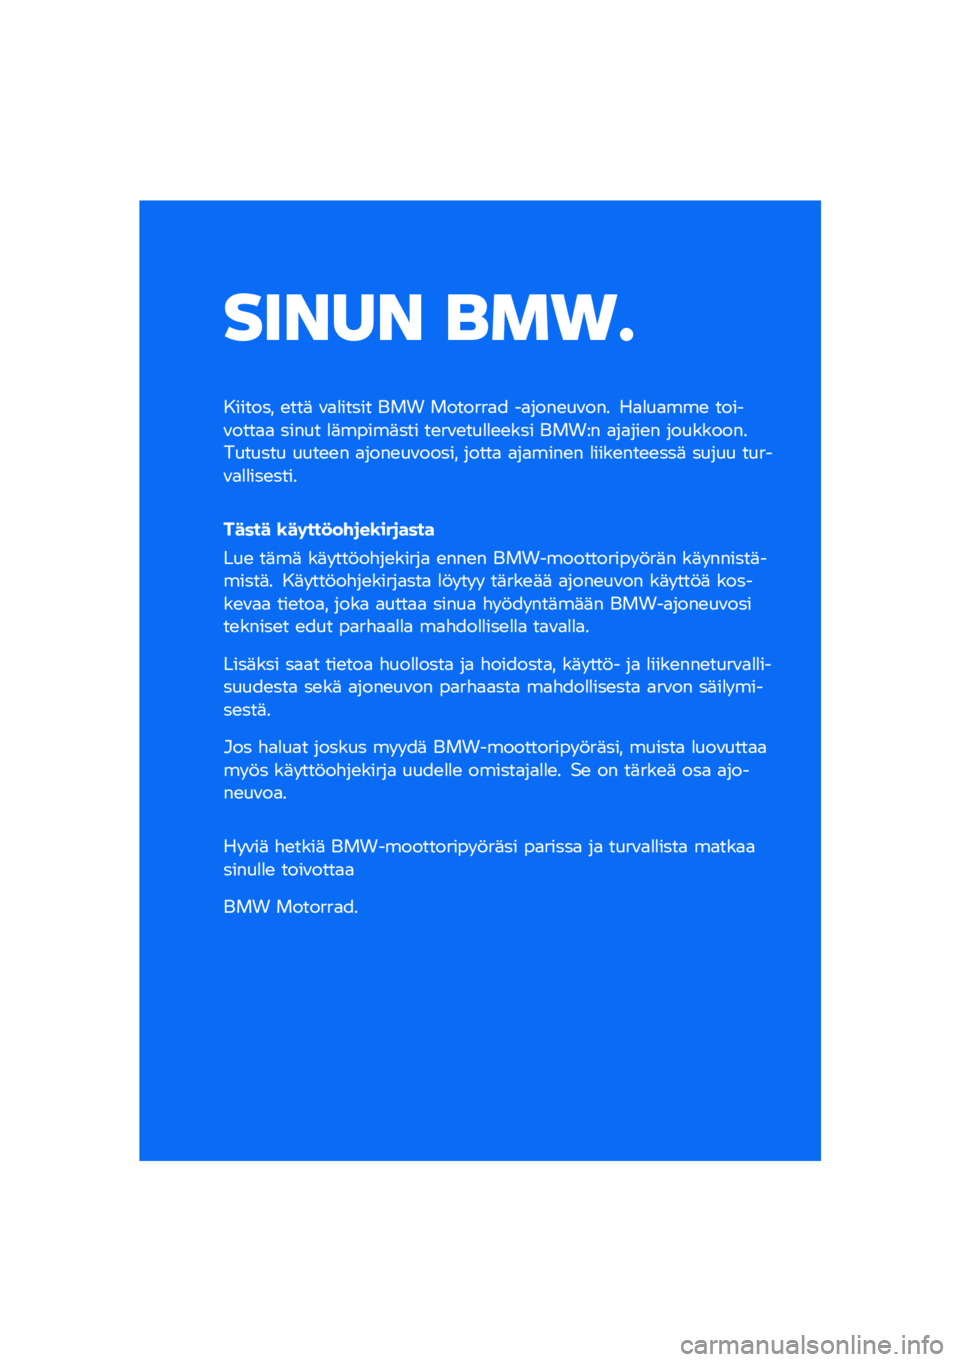 BMW MOTORRAD R NINE T 2021  Käsikirja (in Finnish) ����� ���\b�	
������� �\b���	 �\f�
�
����� ��� �������
� ��
����\b��\f��� ��
�
��
���\b �����\f����
�
 ����� �
�	�����	��� ��\b��\f�\b�